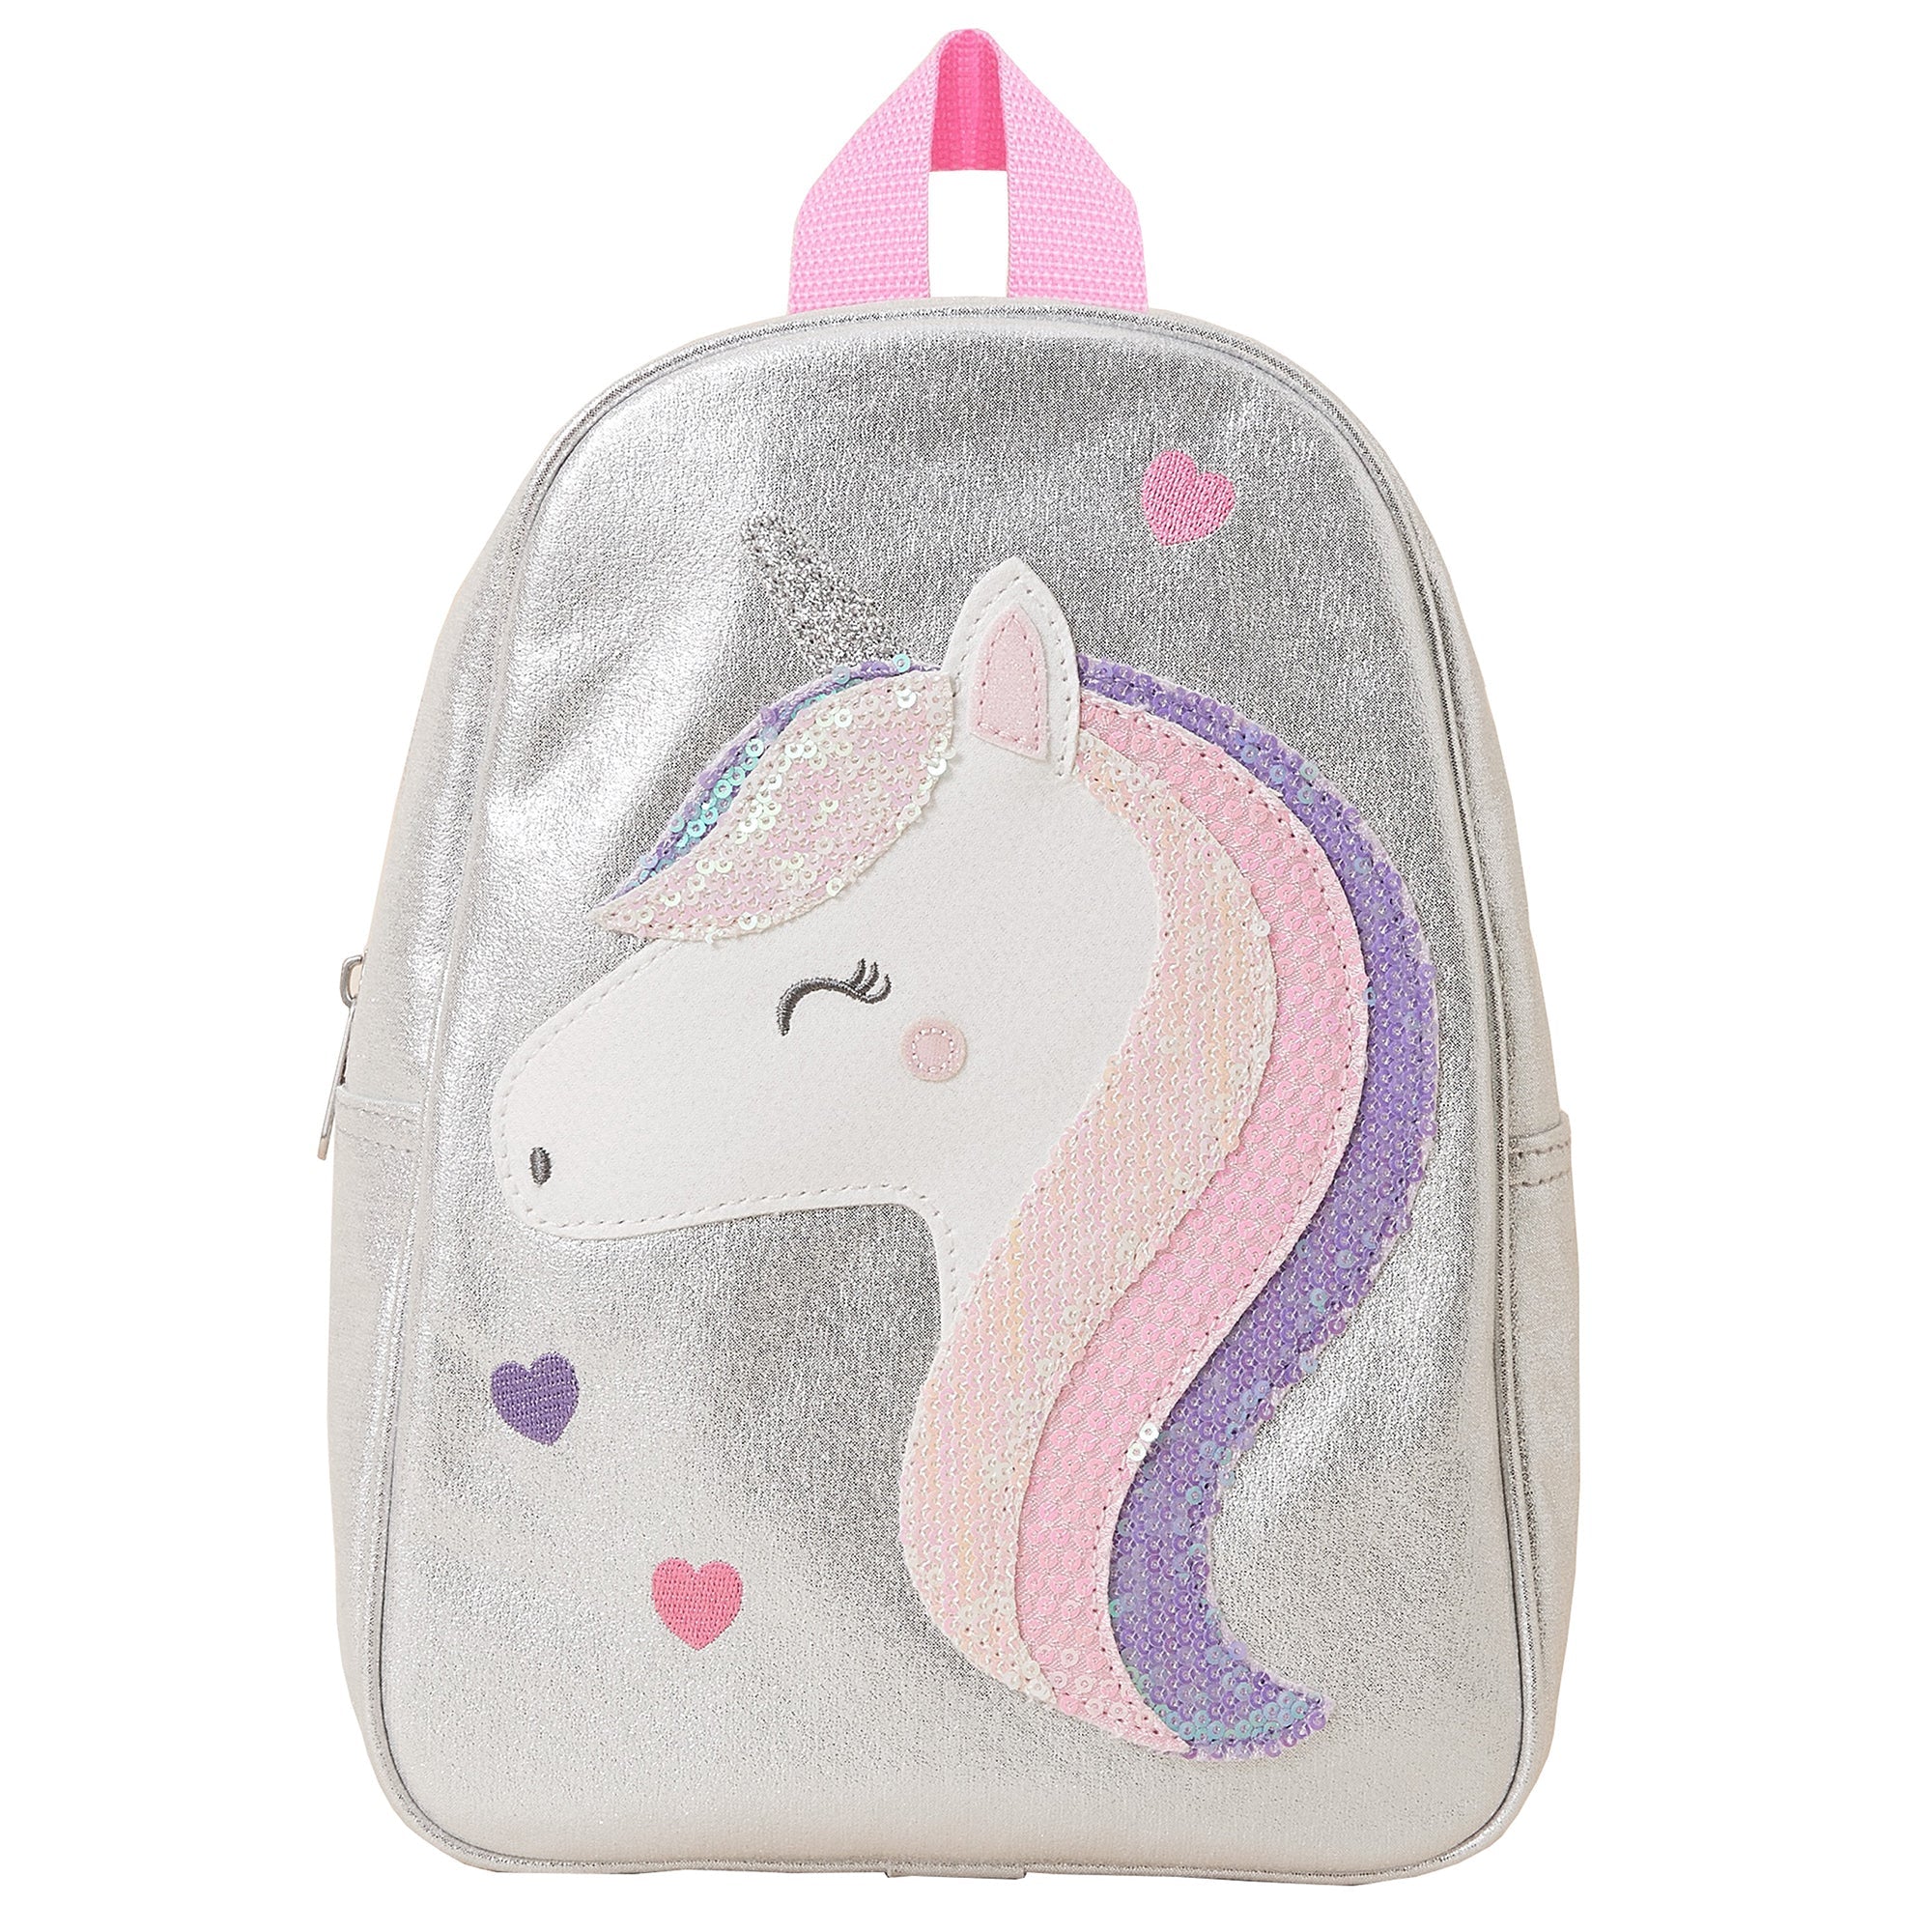 Accessorize London Girl's Unicorn Backpack